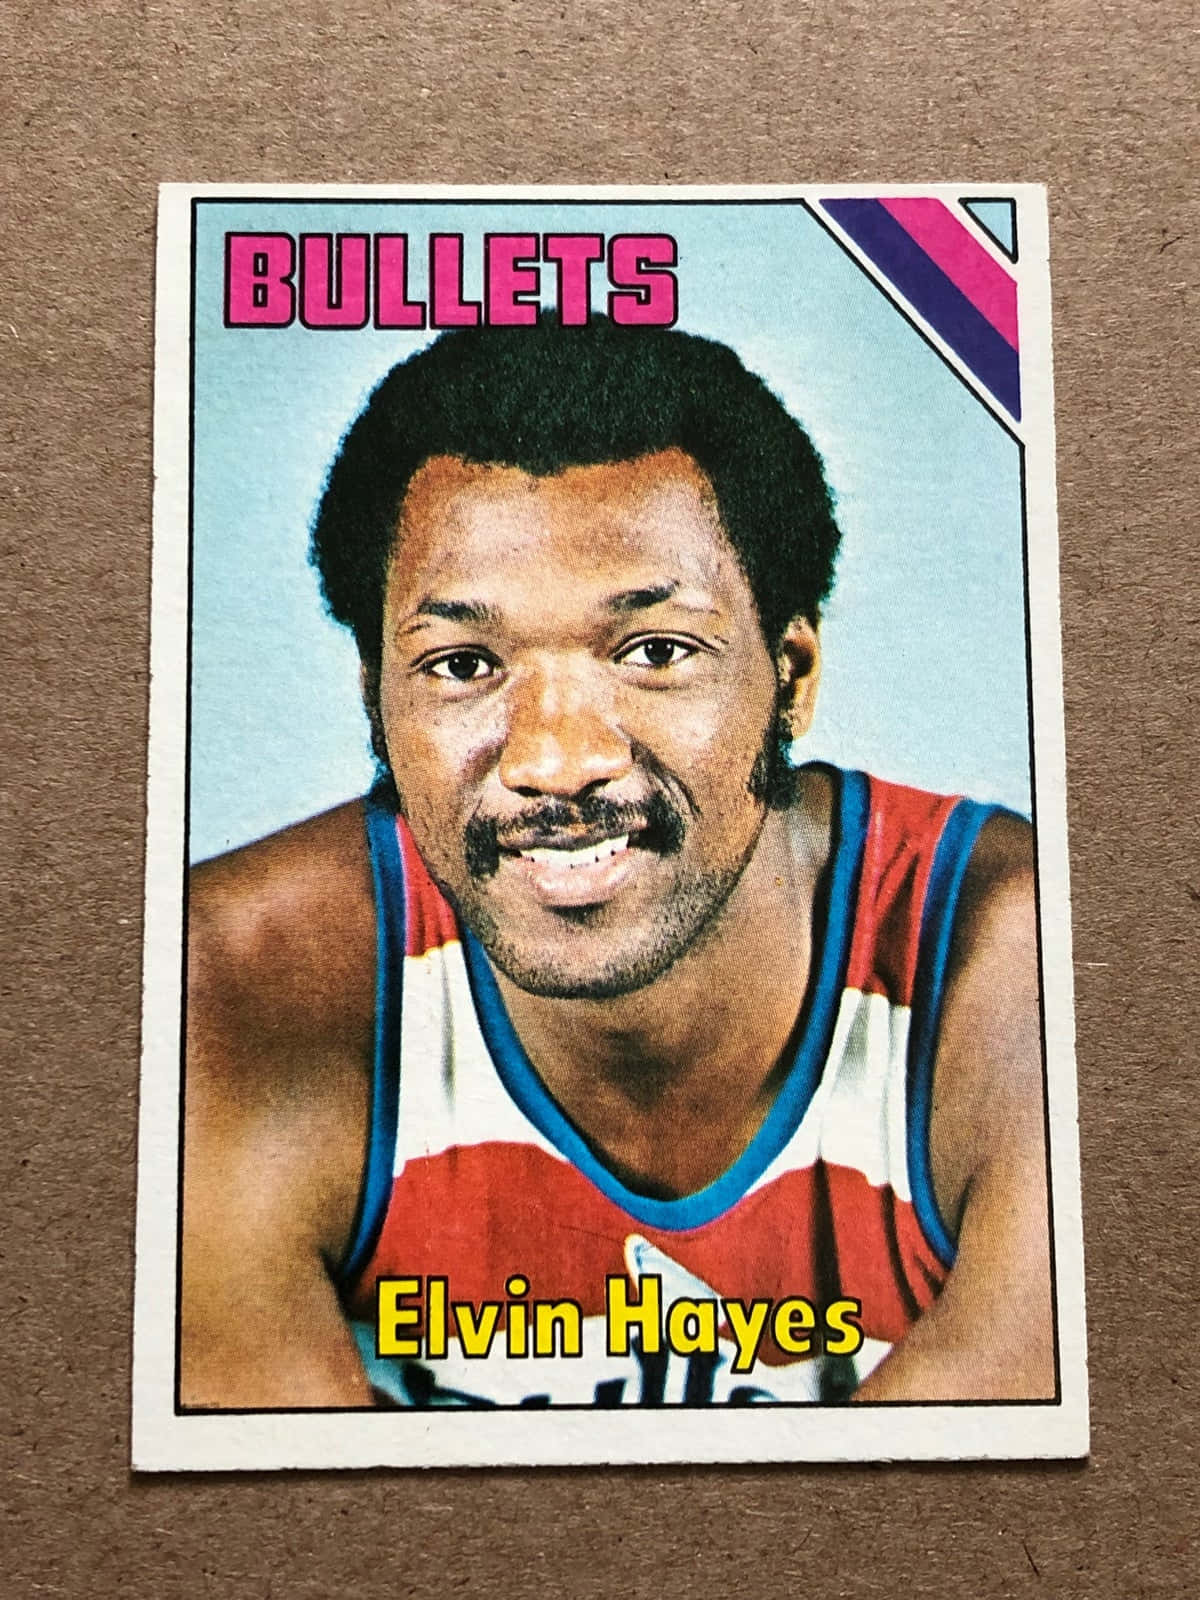 ElvinHayes, Washington Bullets: Elvin Hayes, Washington Bullets. Wallpaper